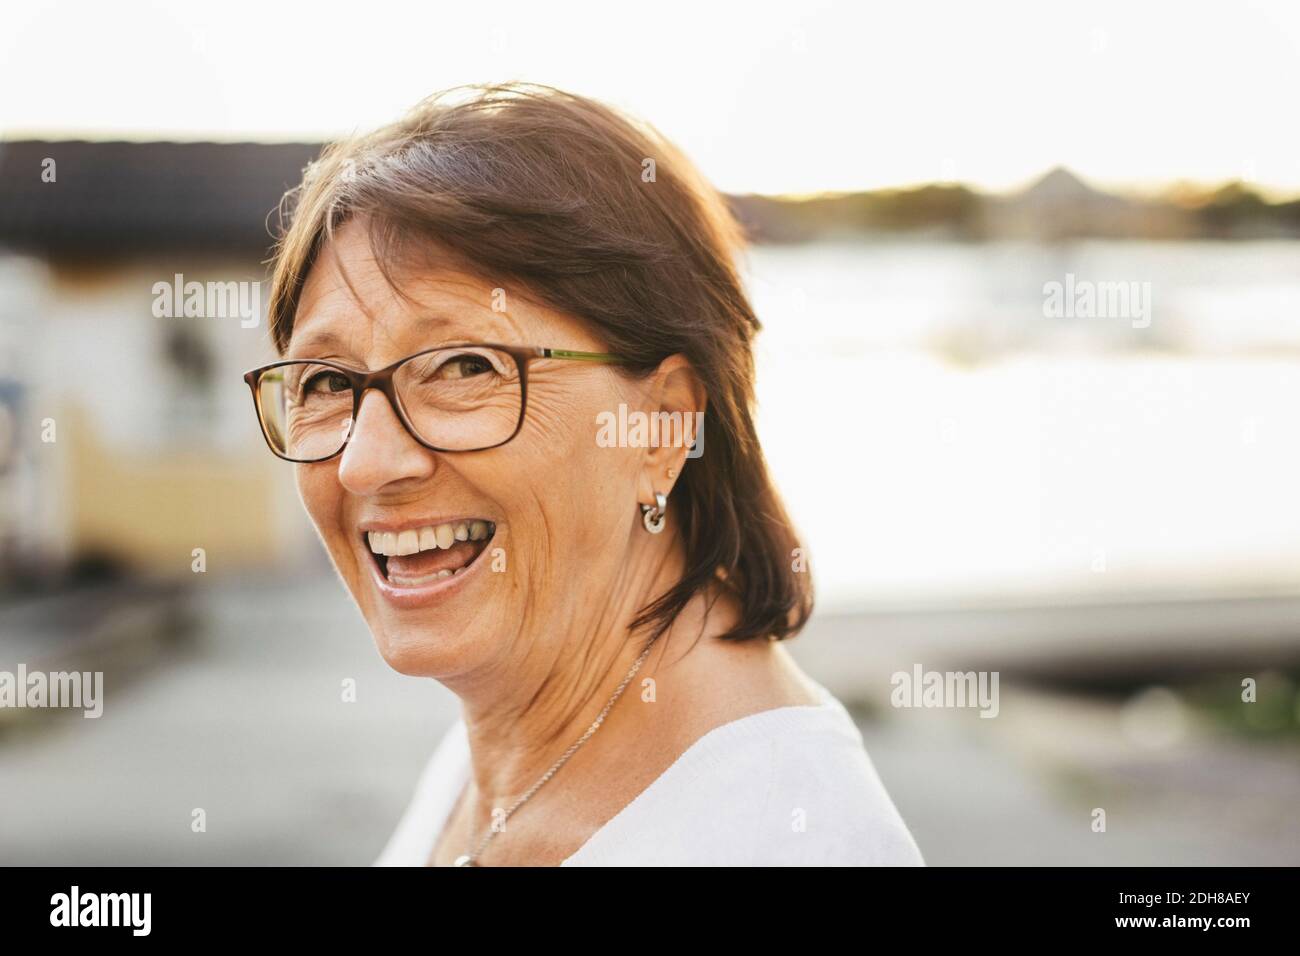 Portrait of confident senior woman smiling outdoors Stock Photo